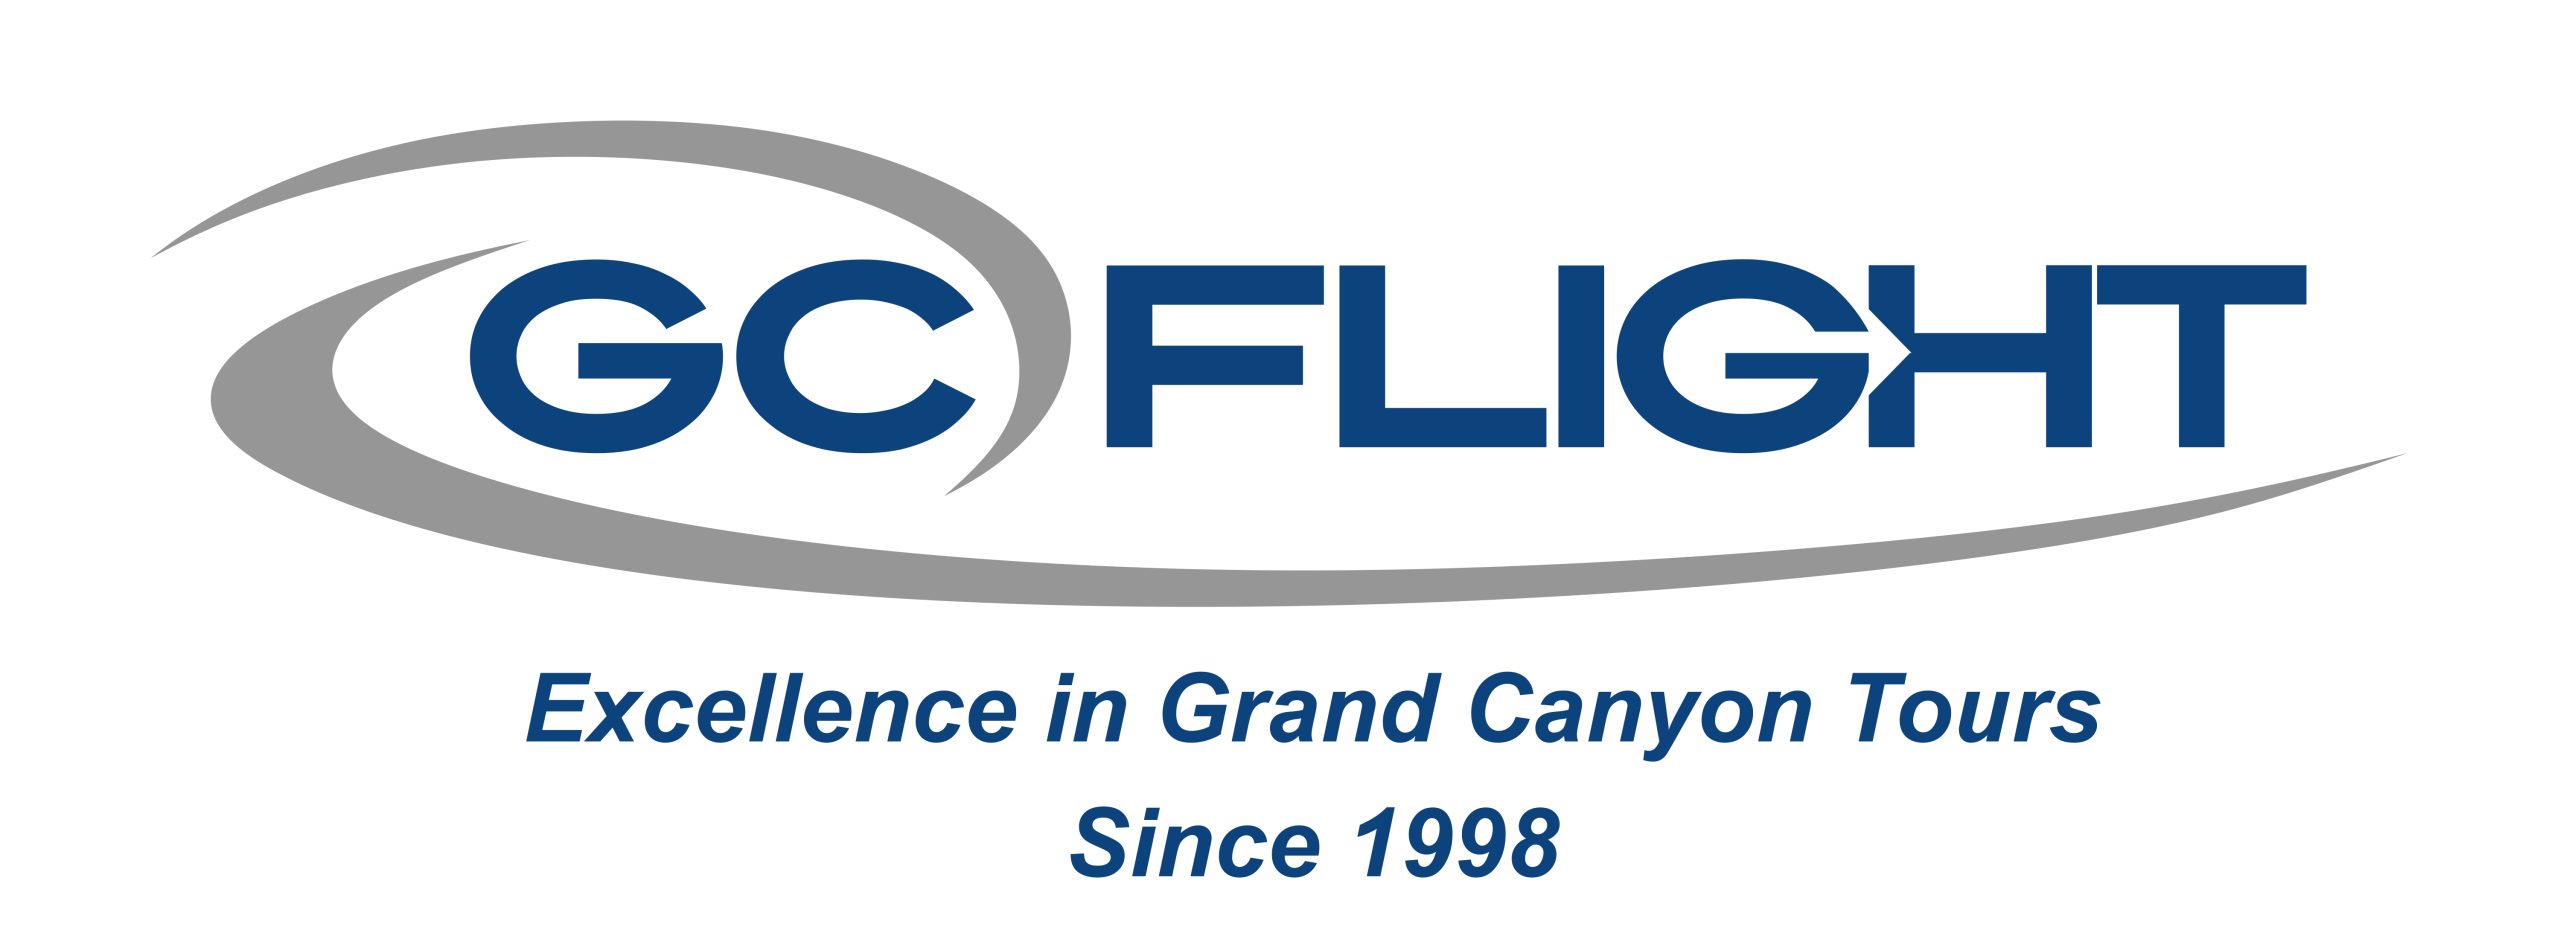 GC Flight Logo